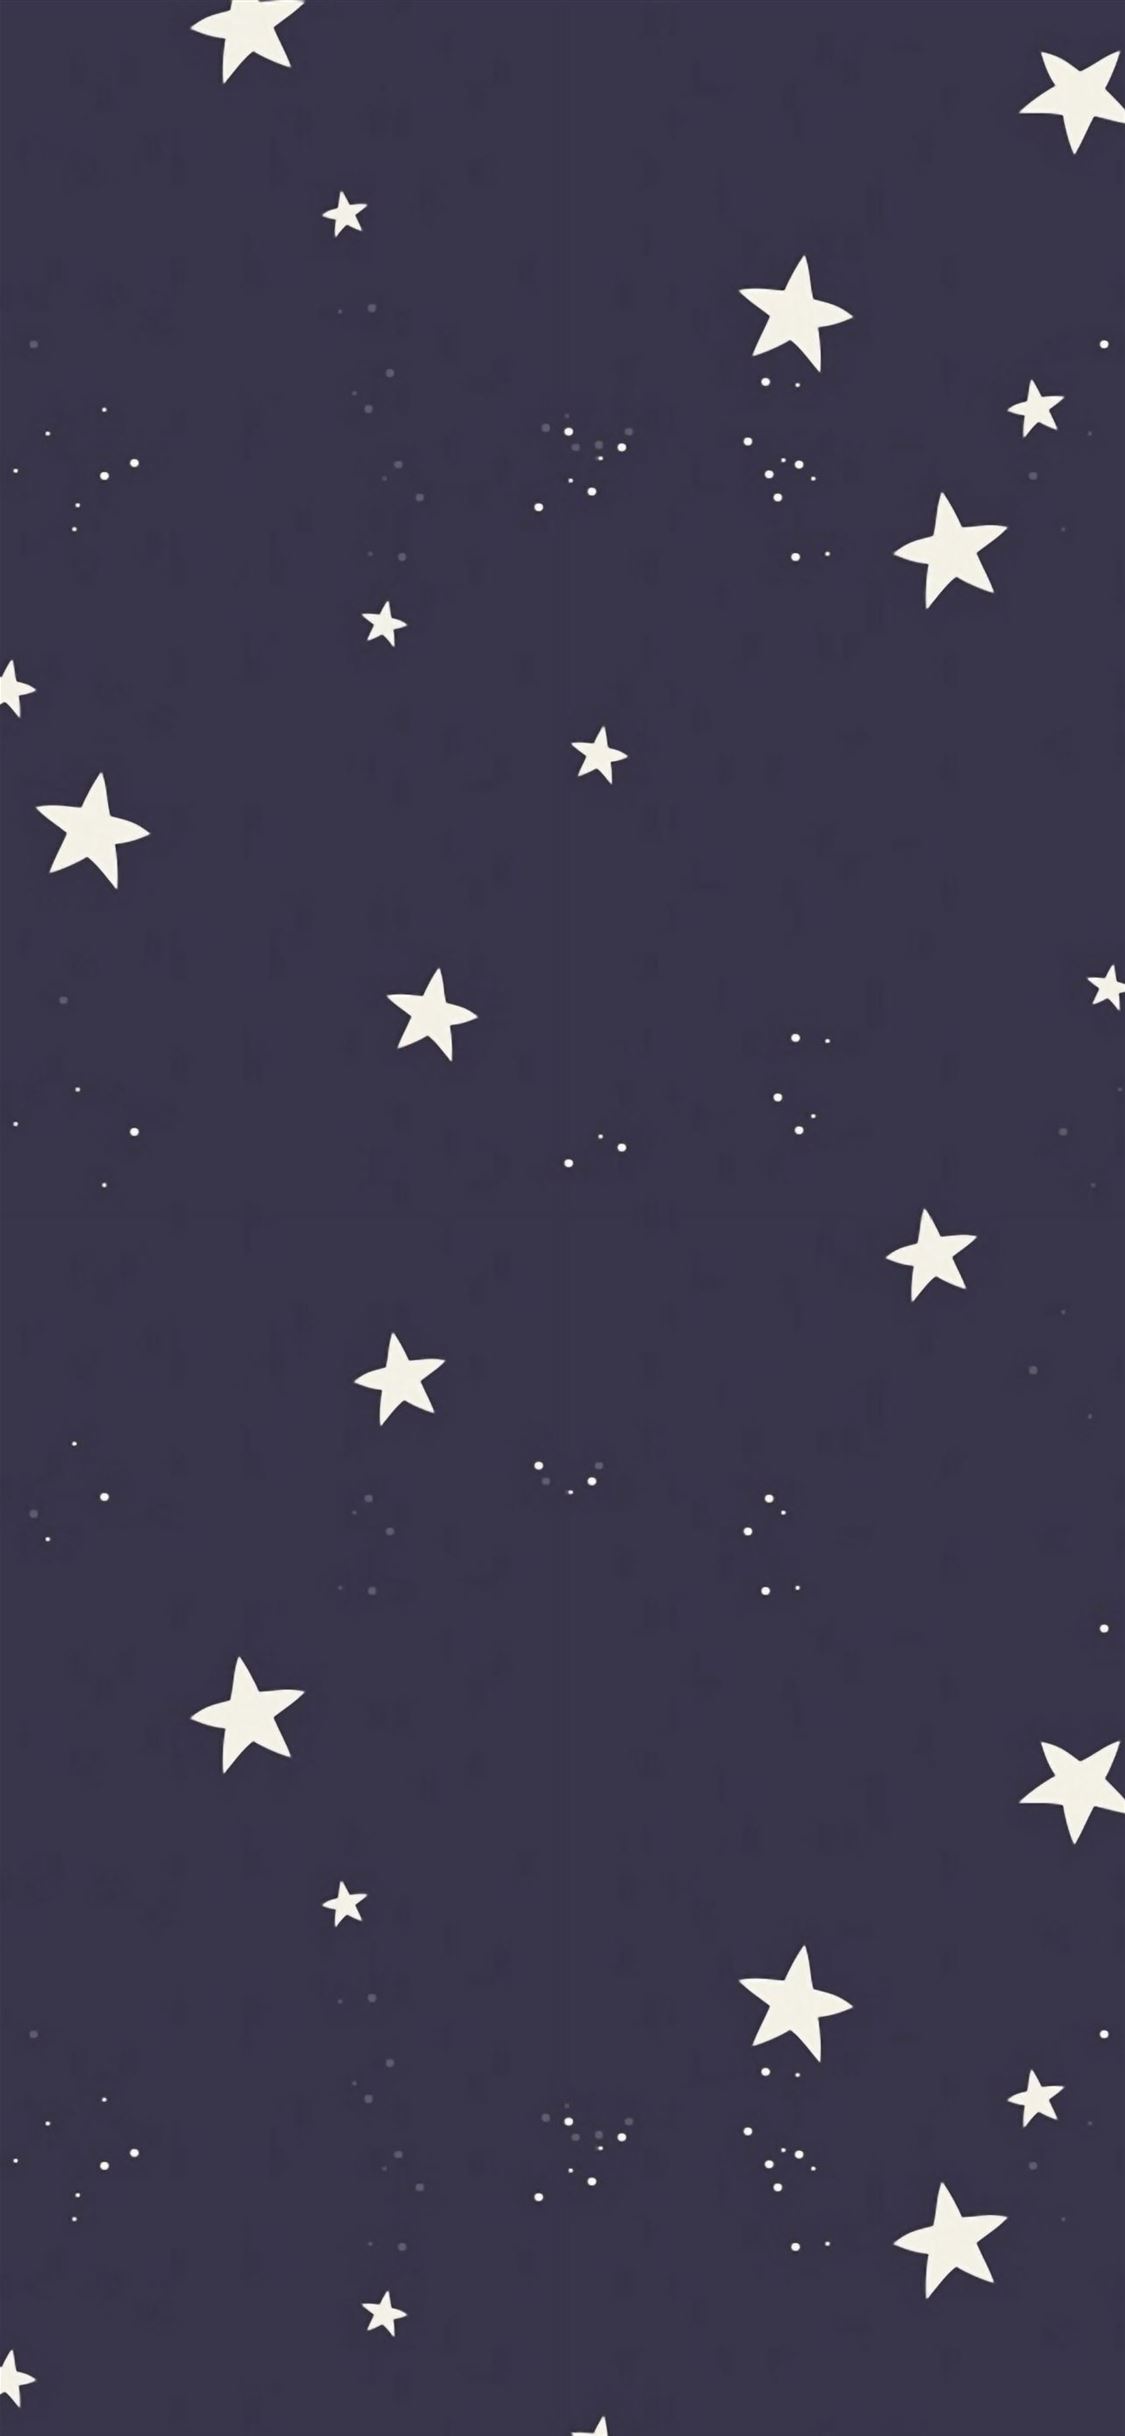 Simple Stars Pattern Dark Background iPhone wallpaper 